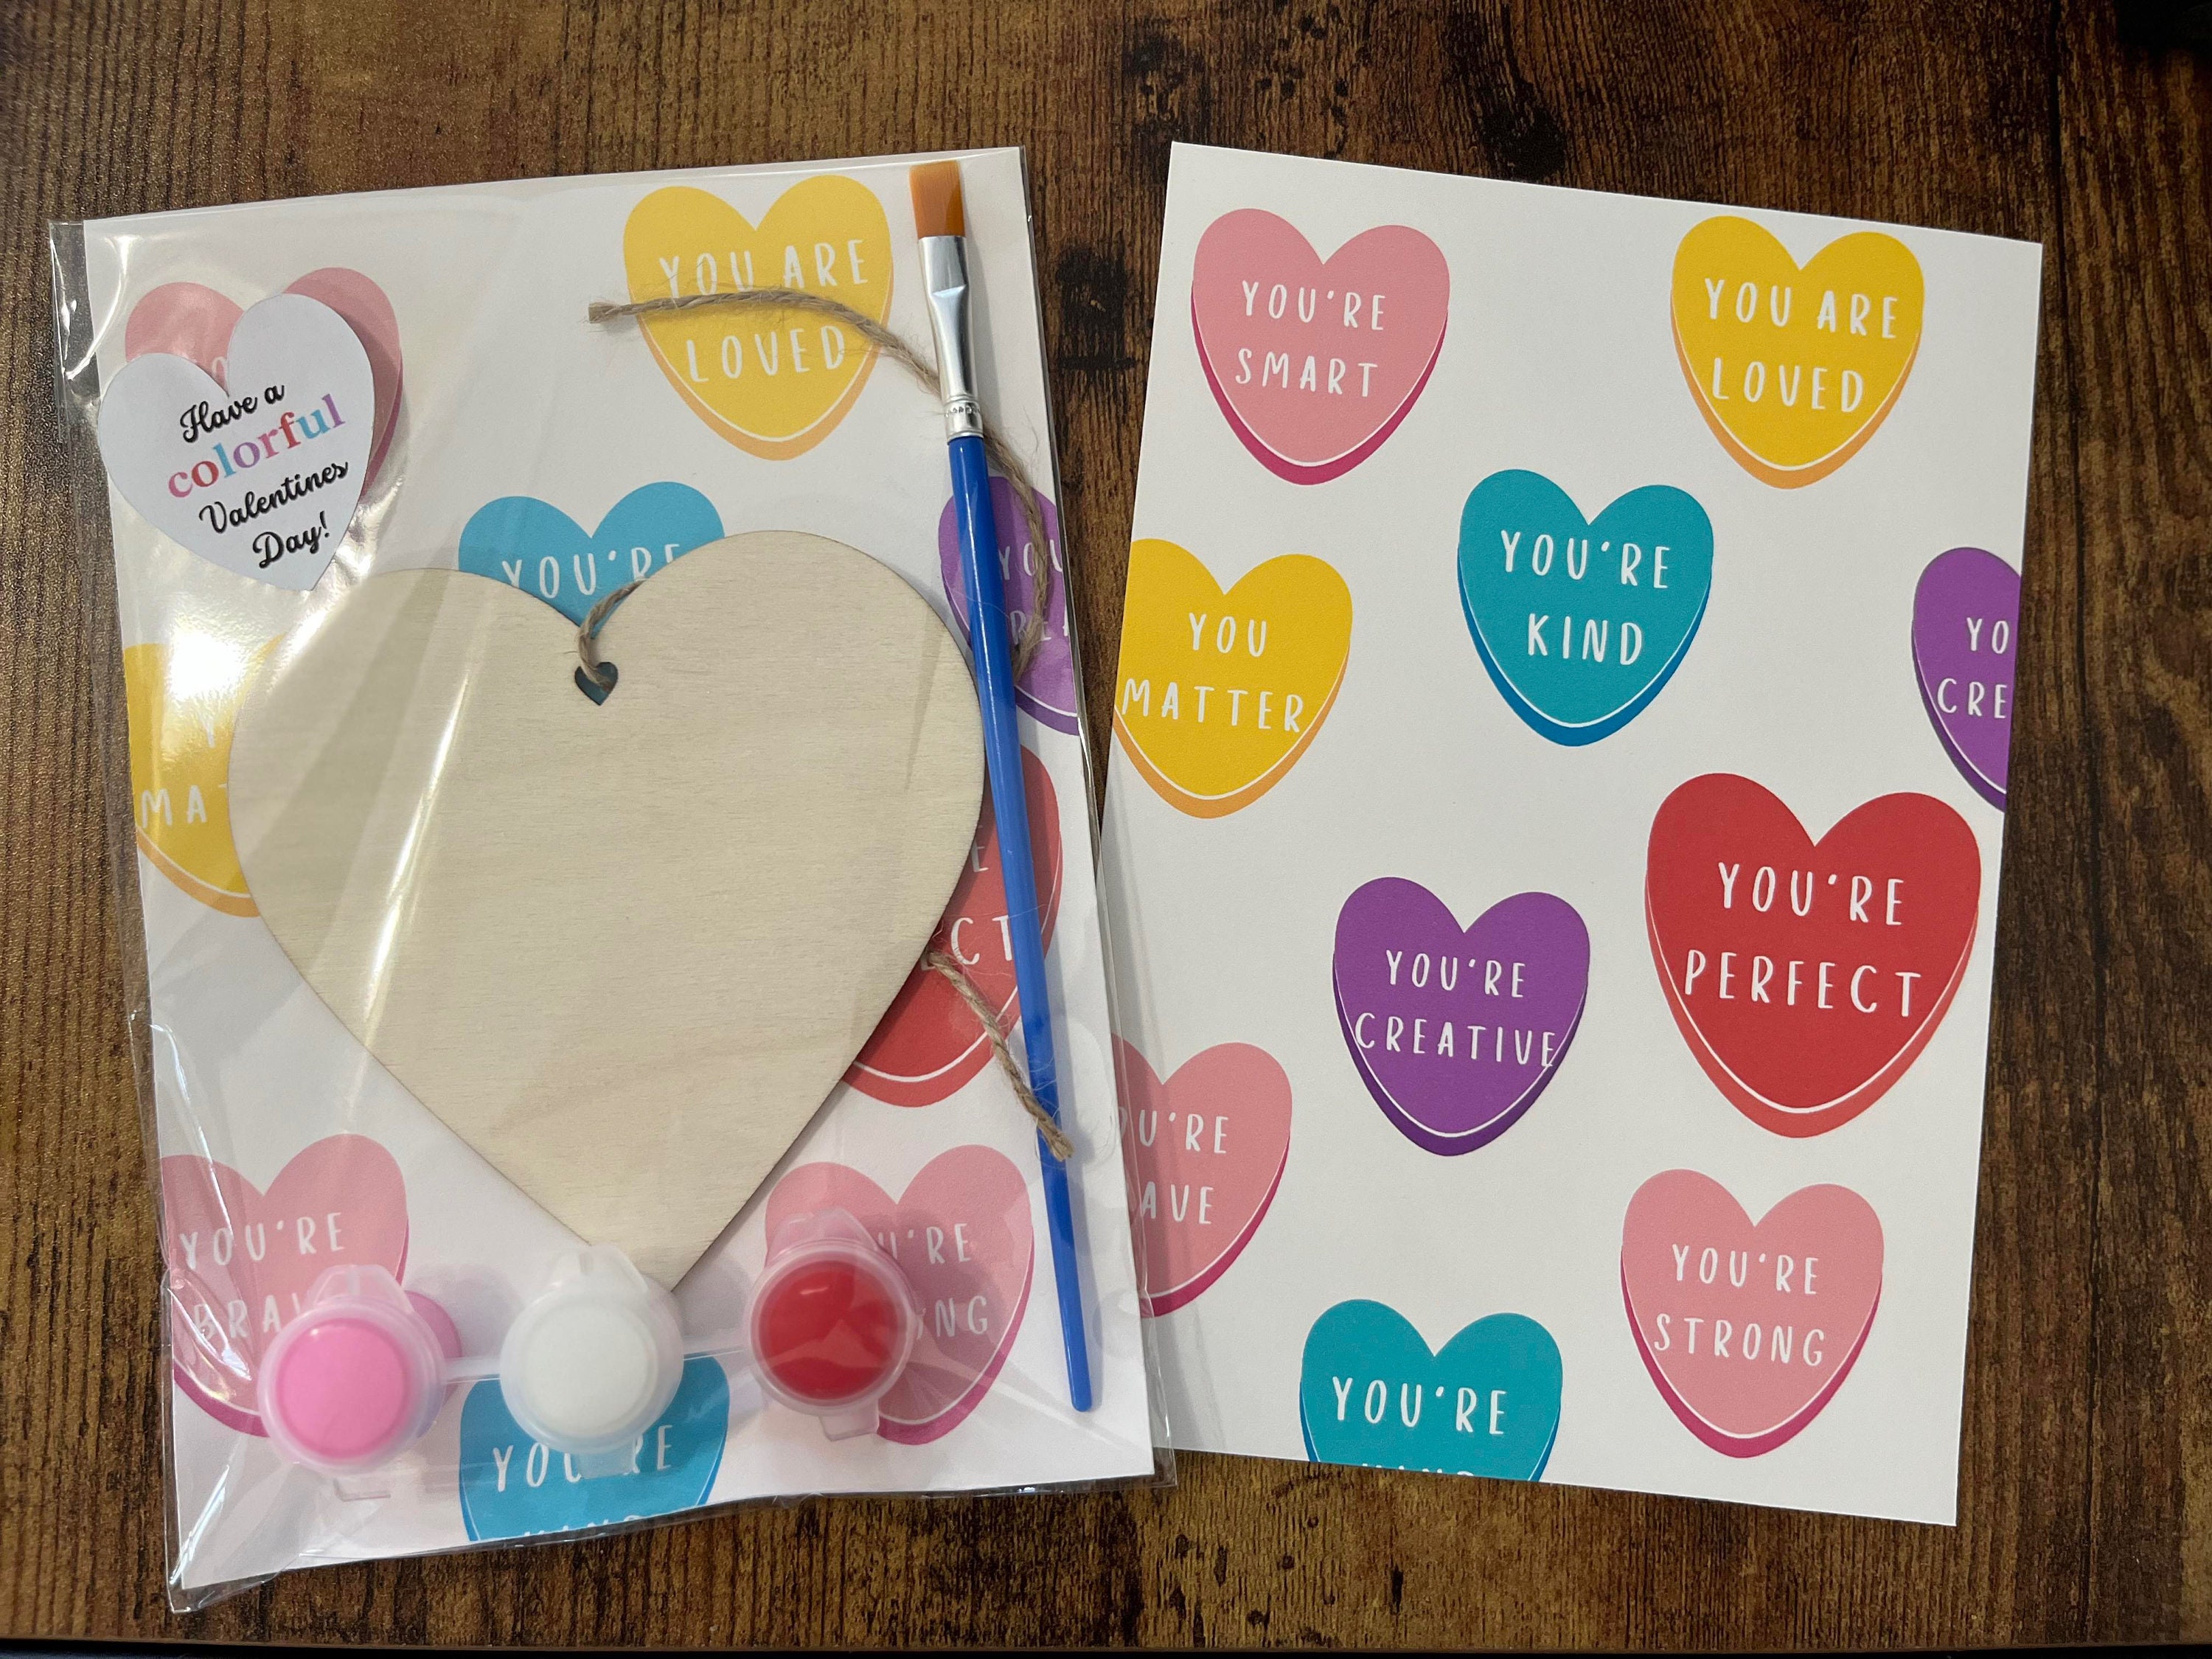 Paint Your Own Concrete Love Heart Gift Set – Ajouter